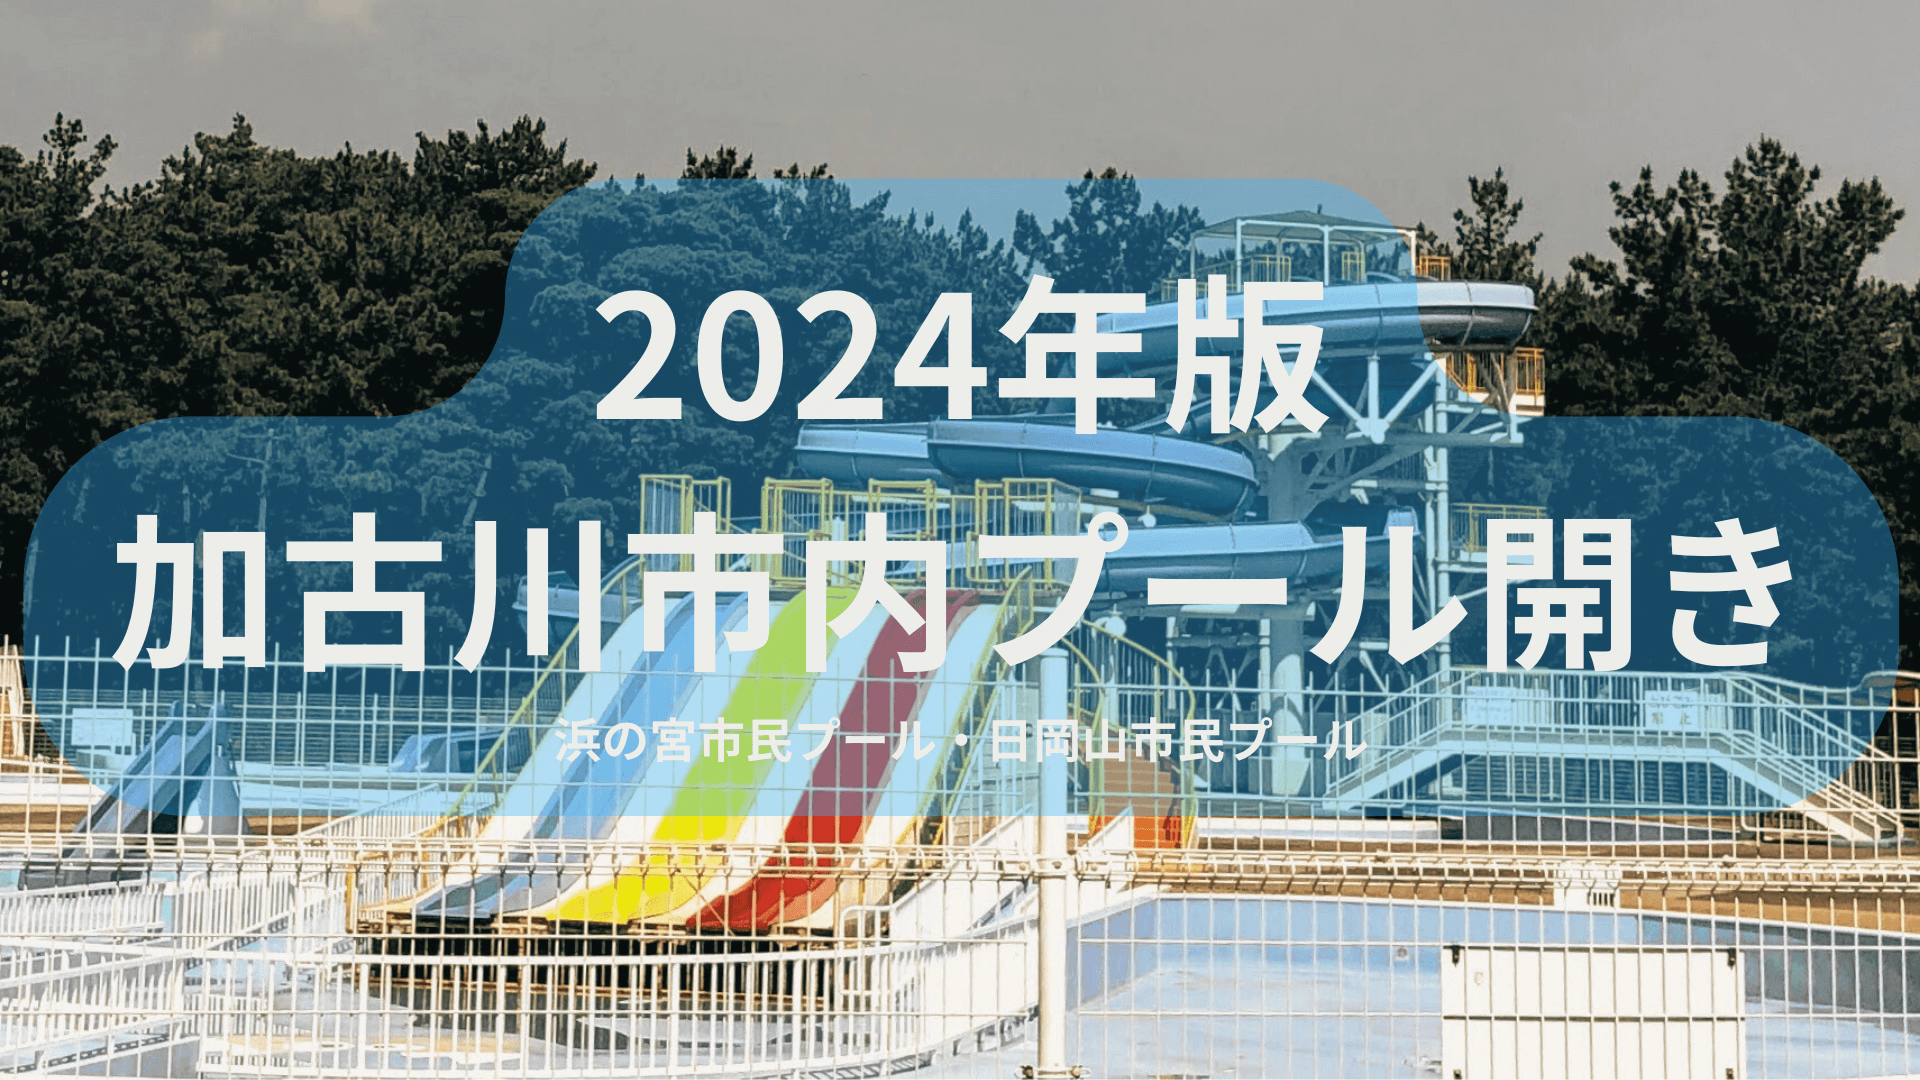 2024年版 加古川市内プール開き 浜の宮市民プール・日岡山市民プール